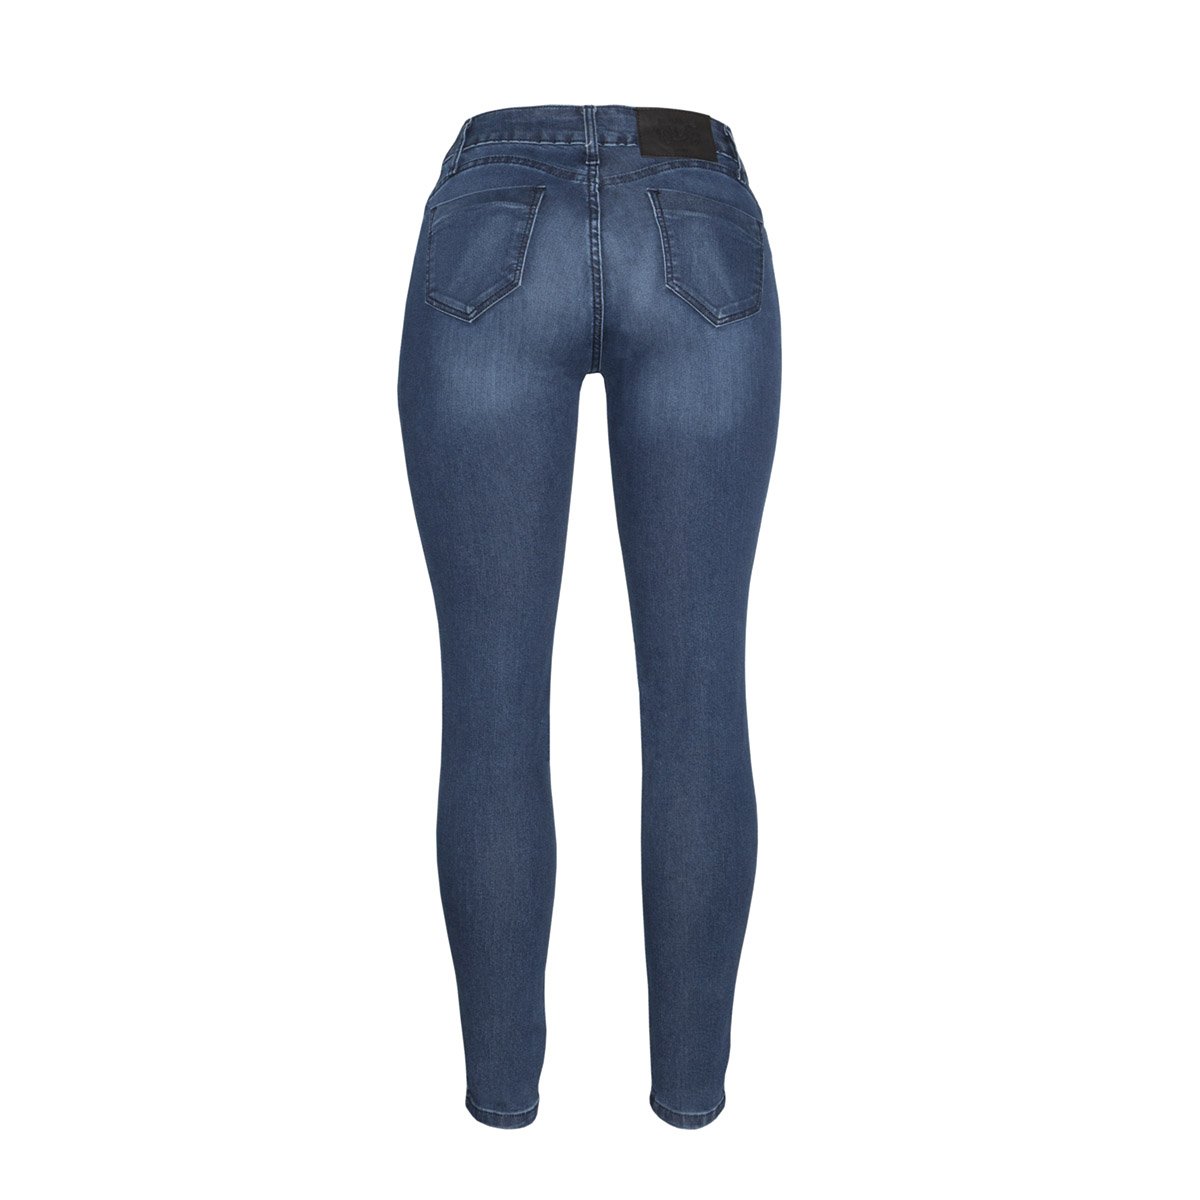 Jeans con Estoperoles Parte Baja de Pierna Limoncello